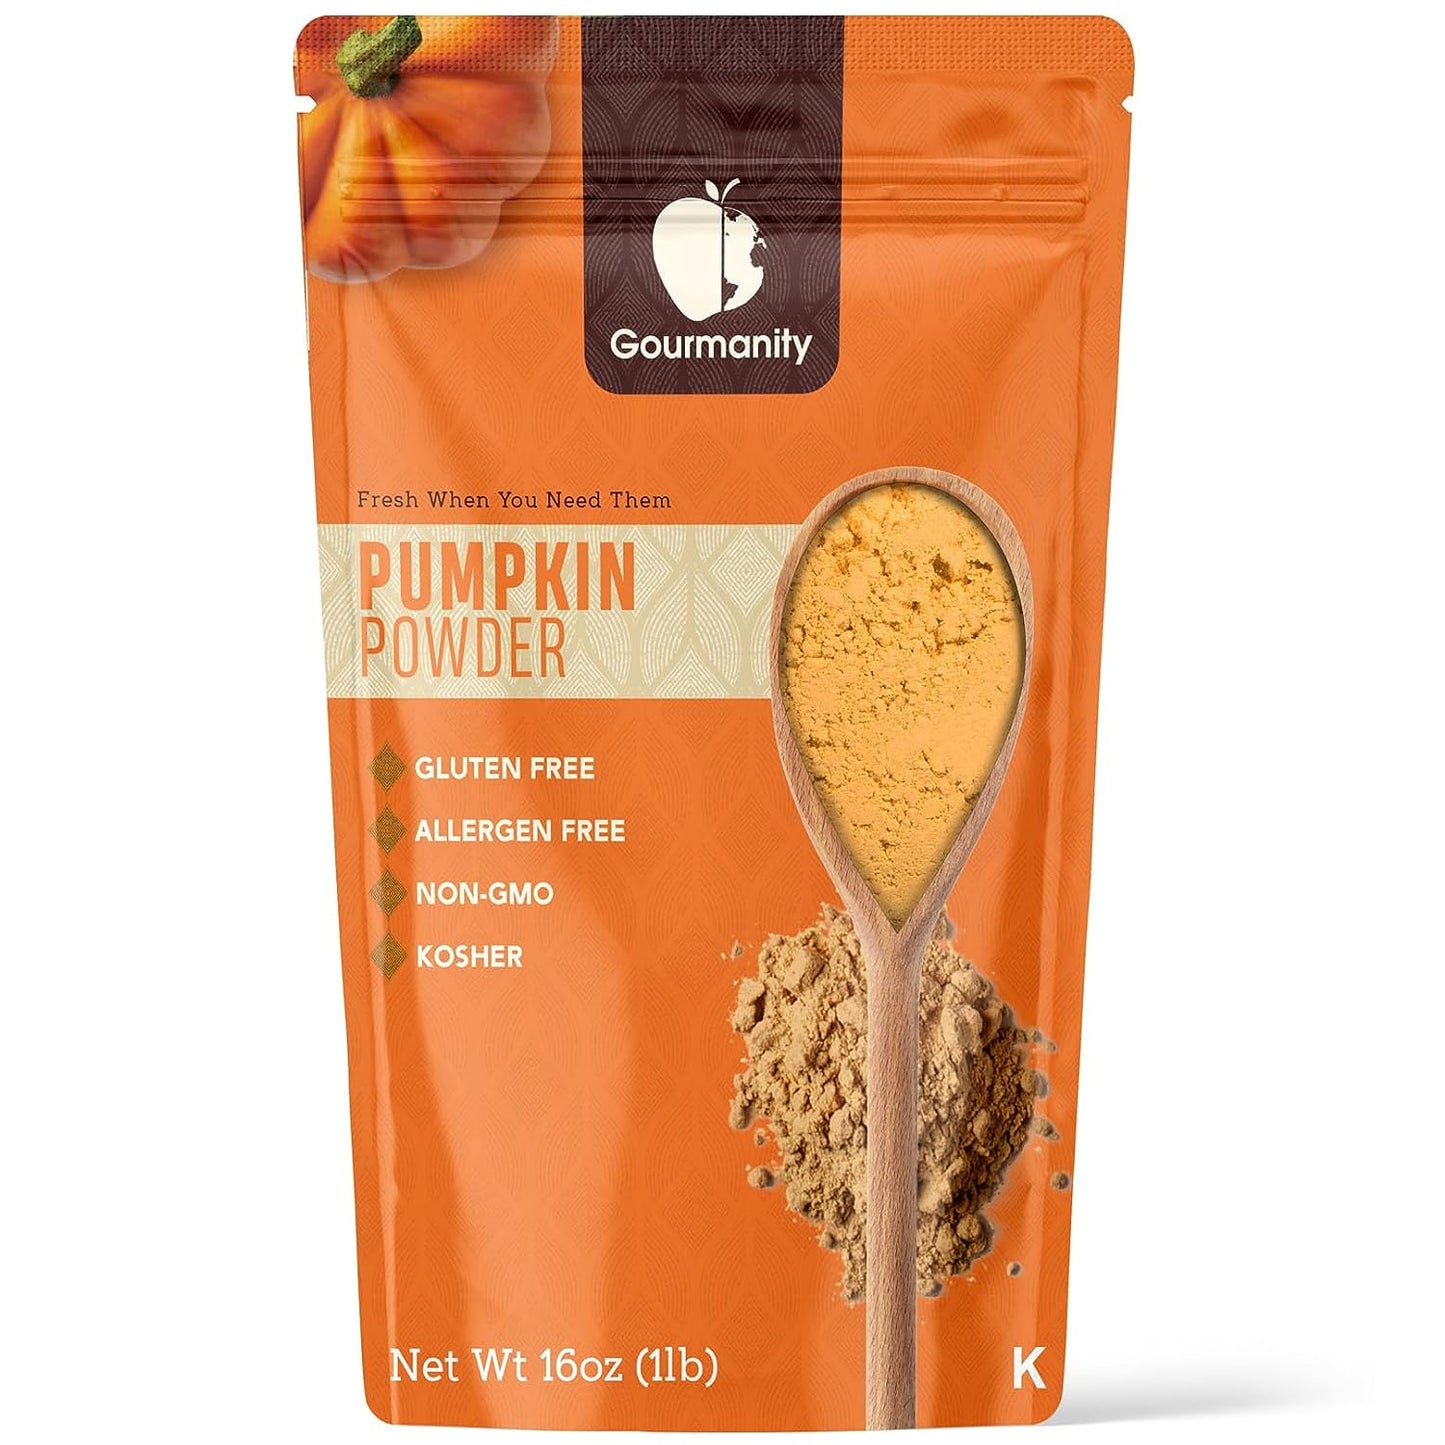 Gourmanity Pumpkin Powder